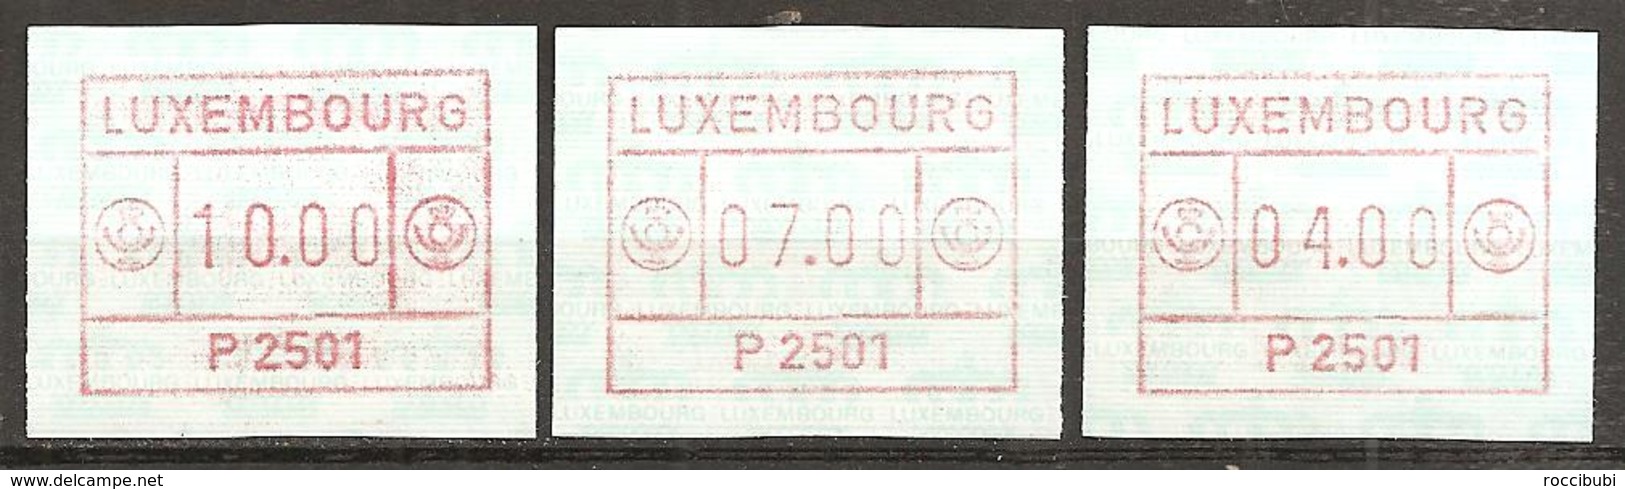 Luxemburg 1983 // Michel ATM 1 ** - Postage Labels